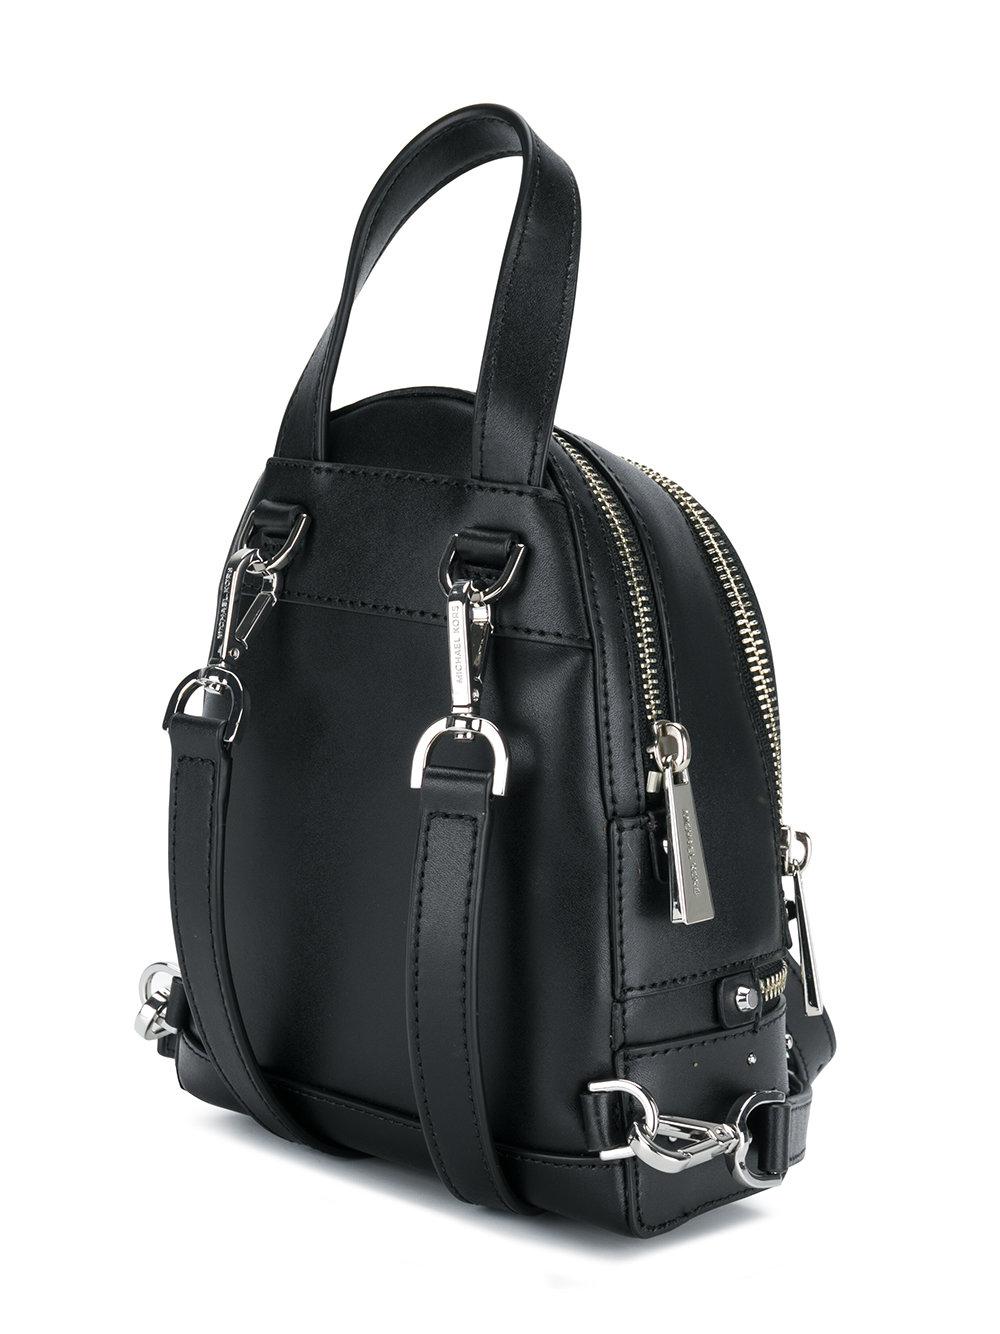 MICHAEL Michael Kors Leather Rhea Mini Backpack in Black - Lyst